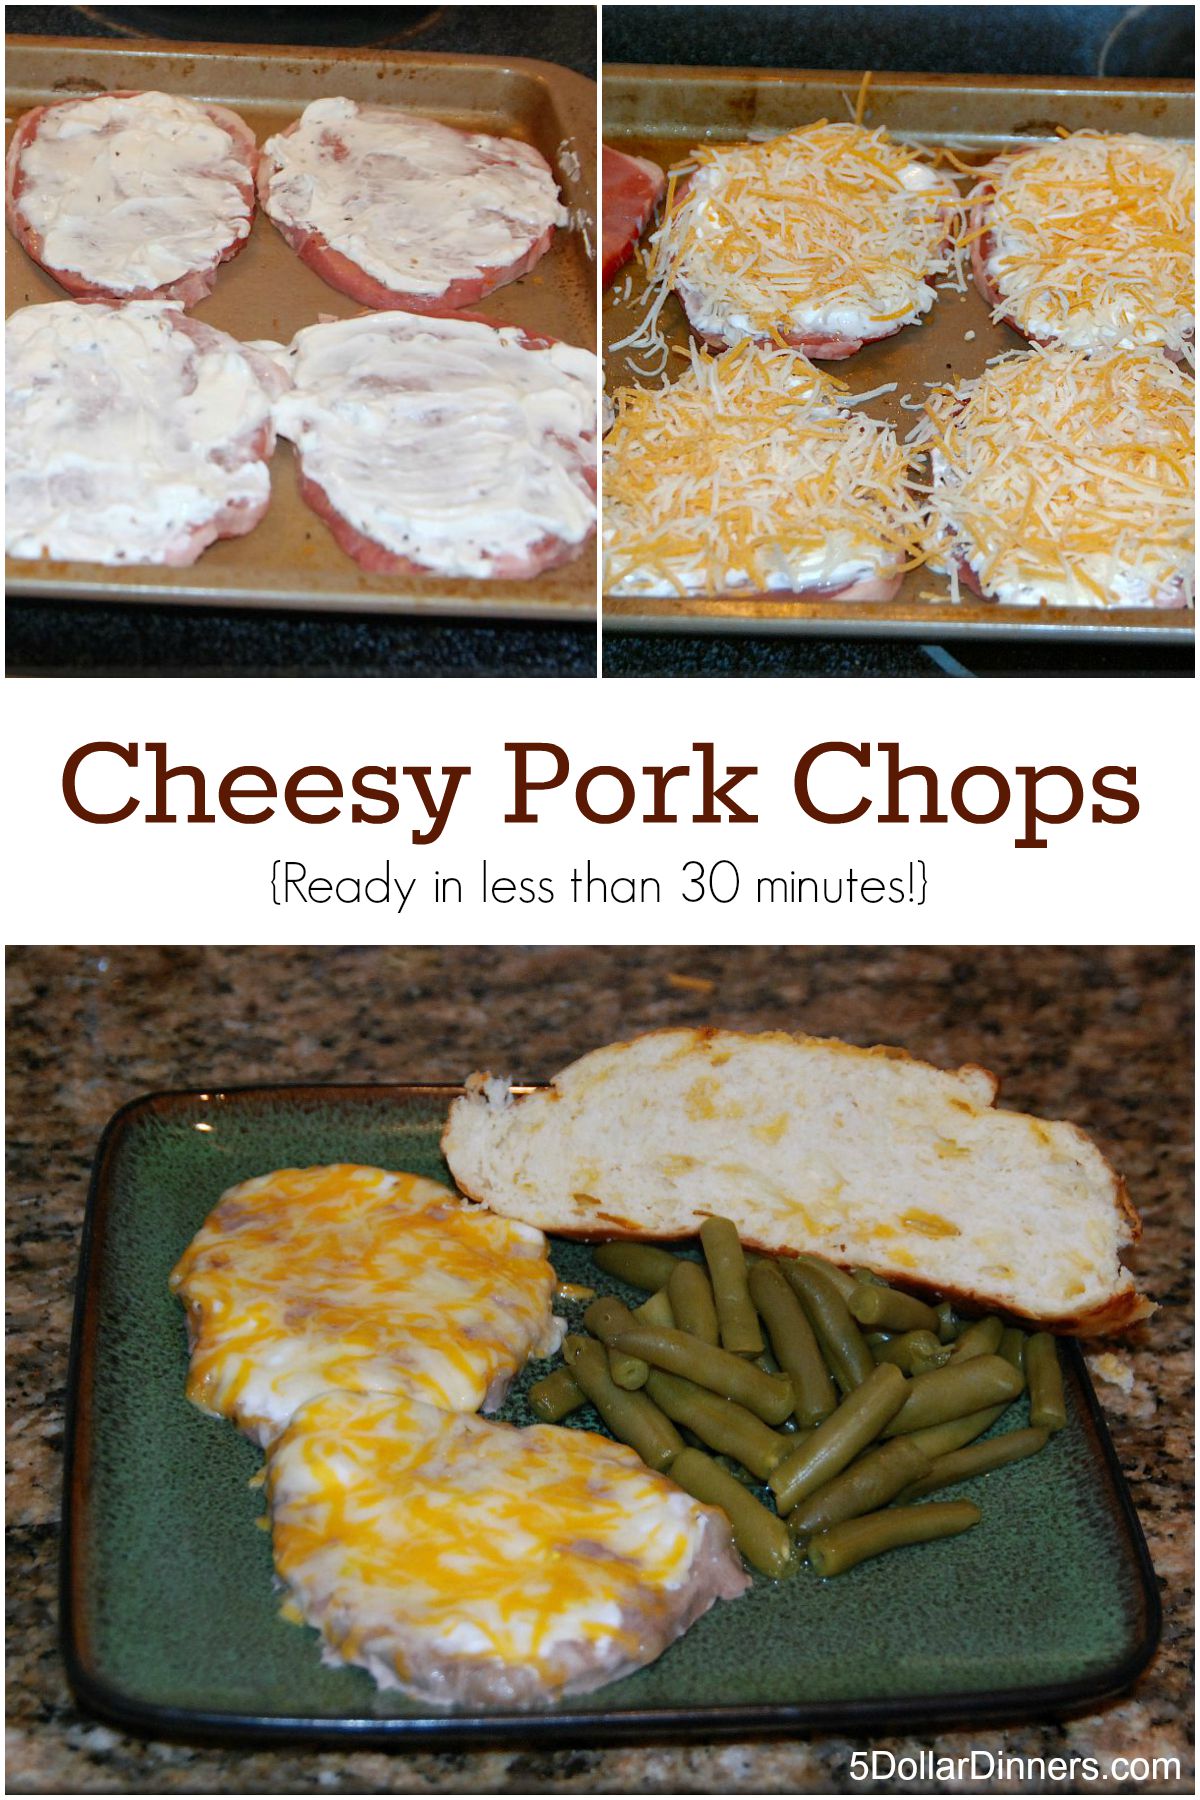 Cheesy Pork Chops from 5DollarDinners.com